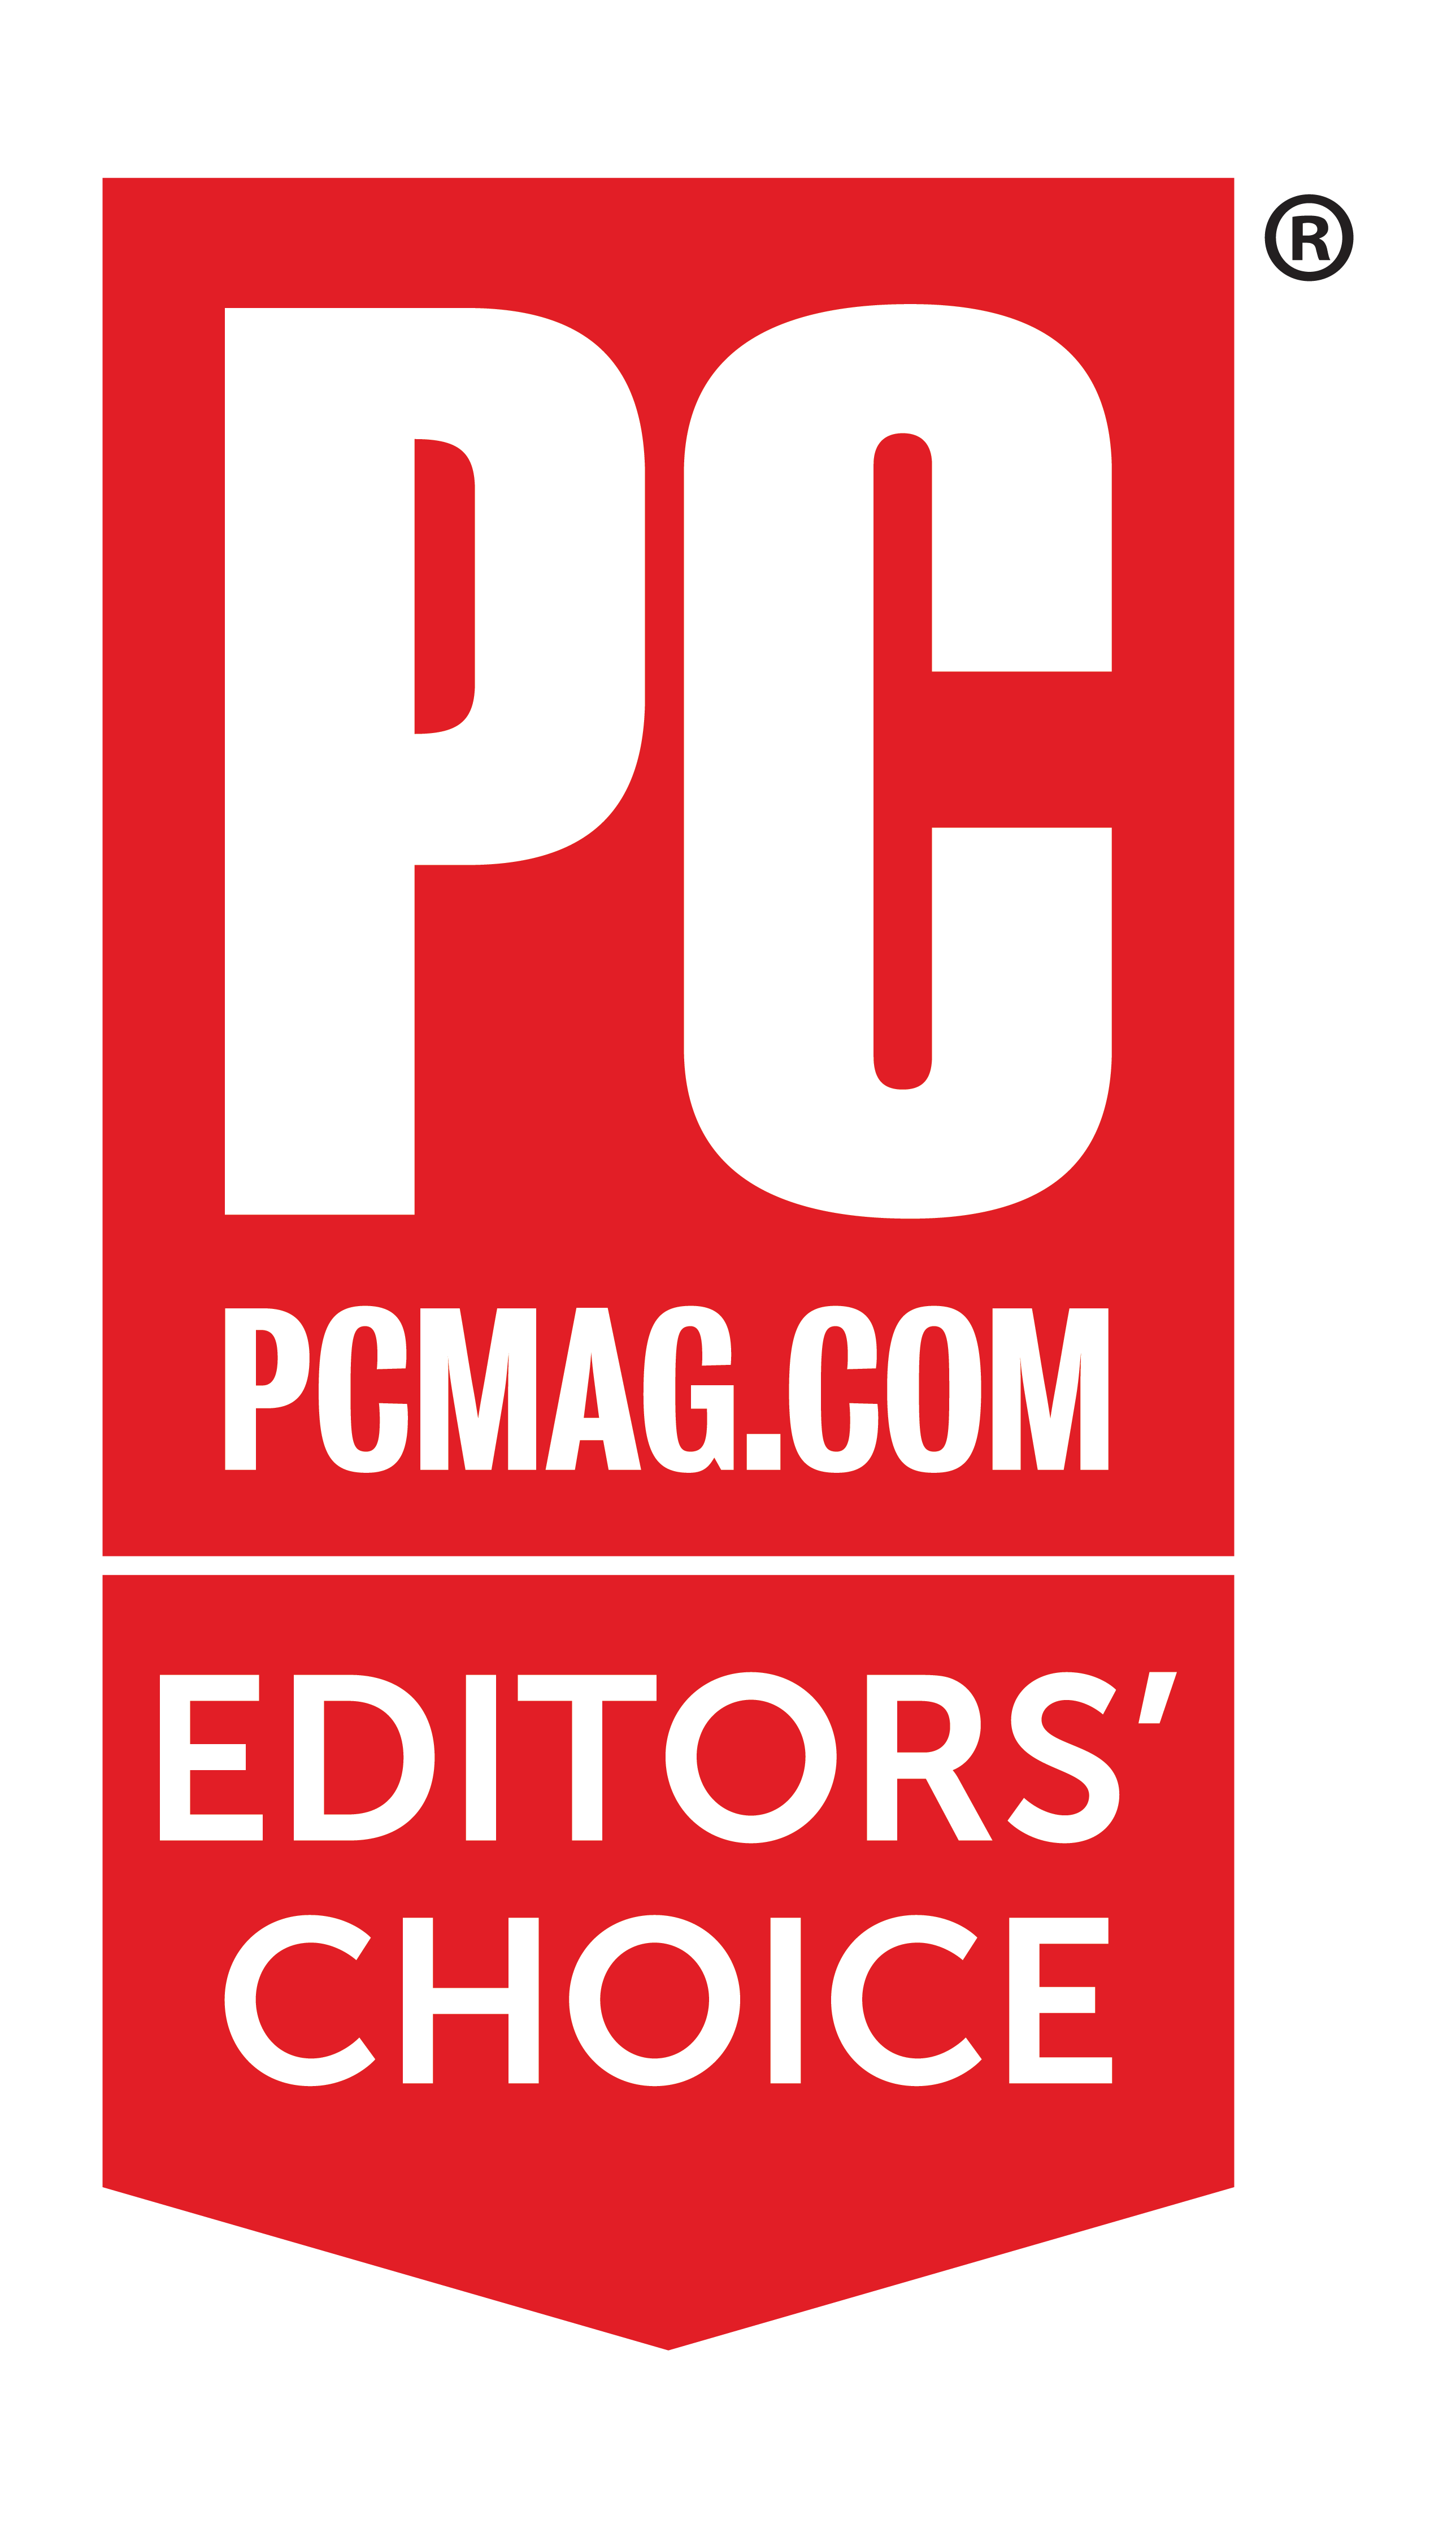 2021 <b>Editors' Choice</b>